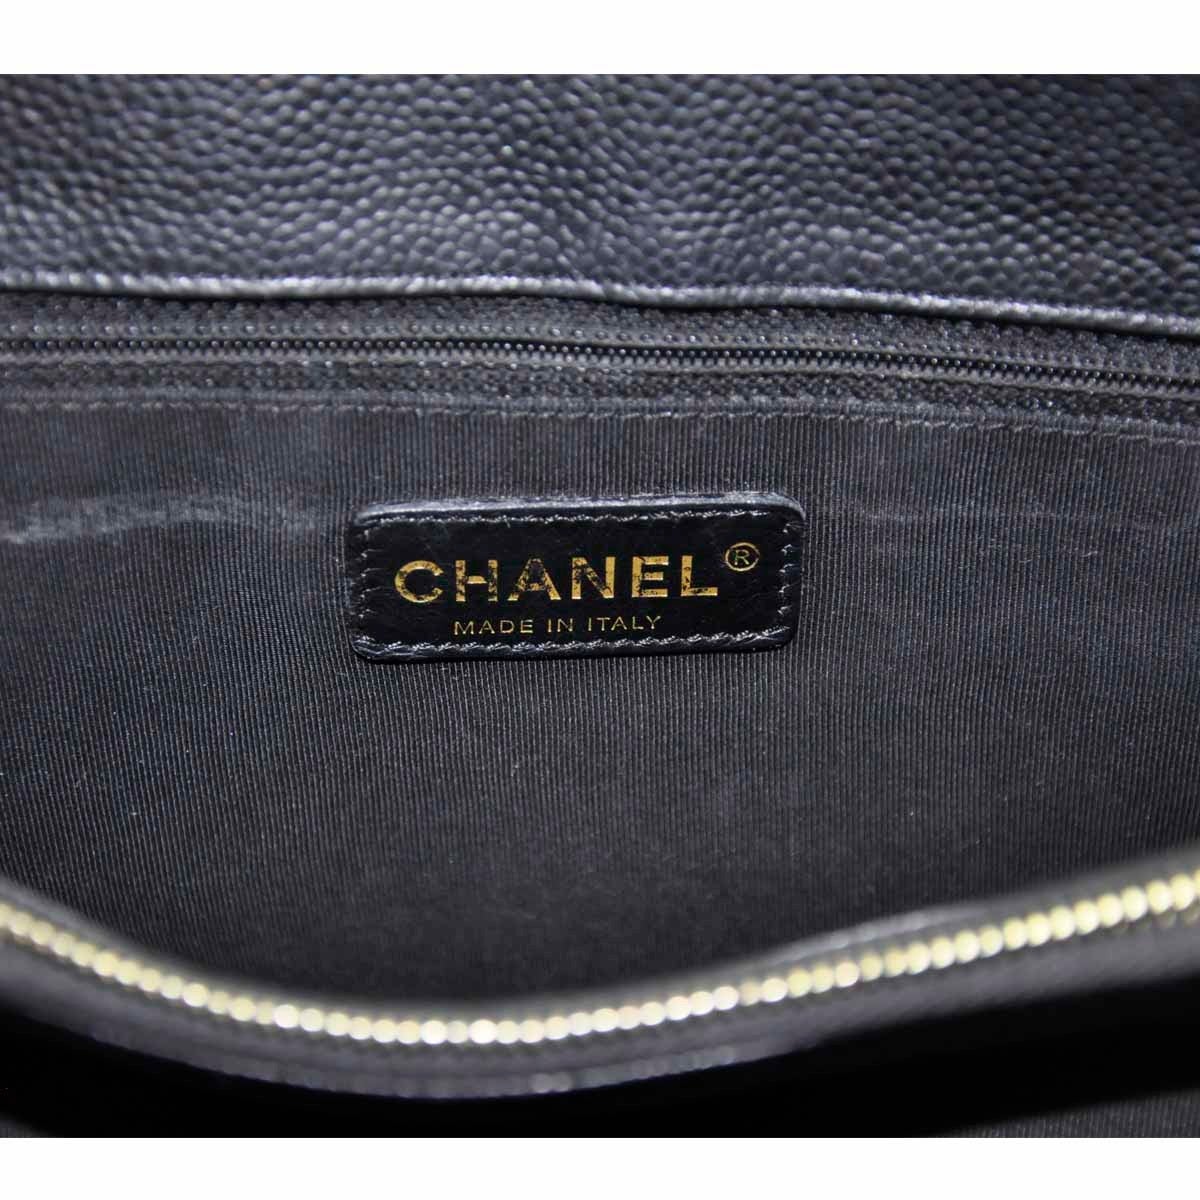 Chanel Grand Shopper Tote GST Black Leather Handbag 5